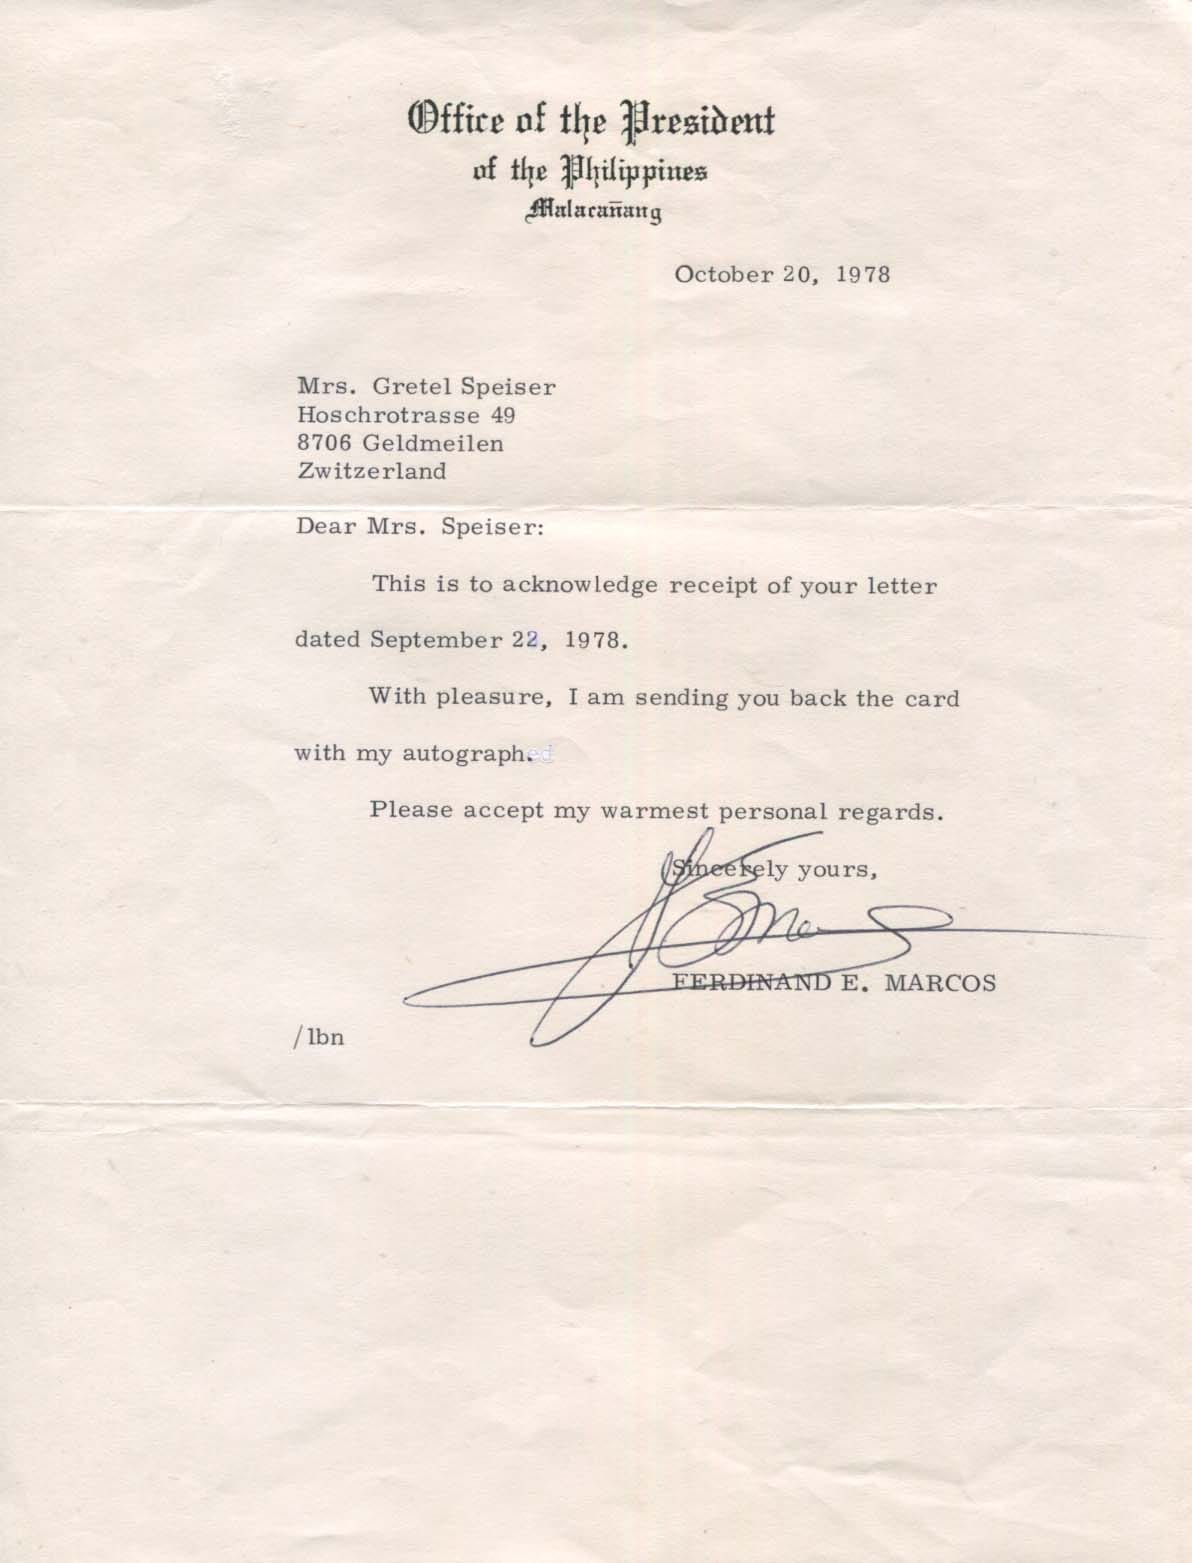 Ferdinand Marcos Autograph Autogramm | ID 7589854052501